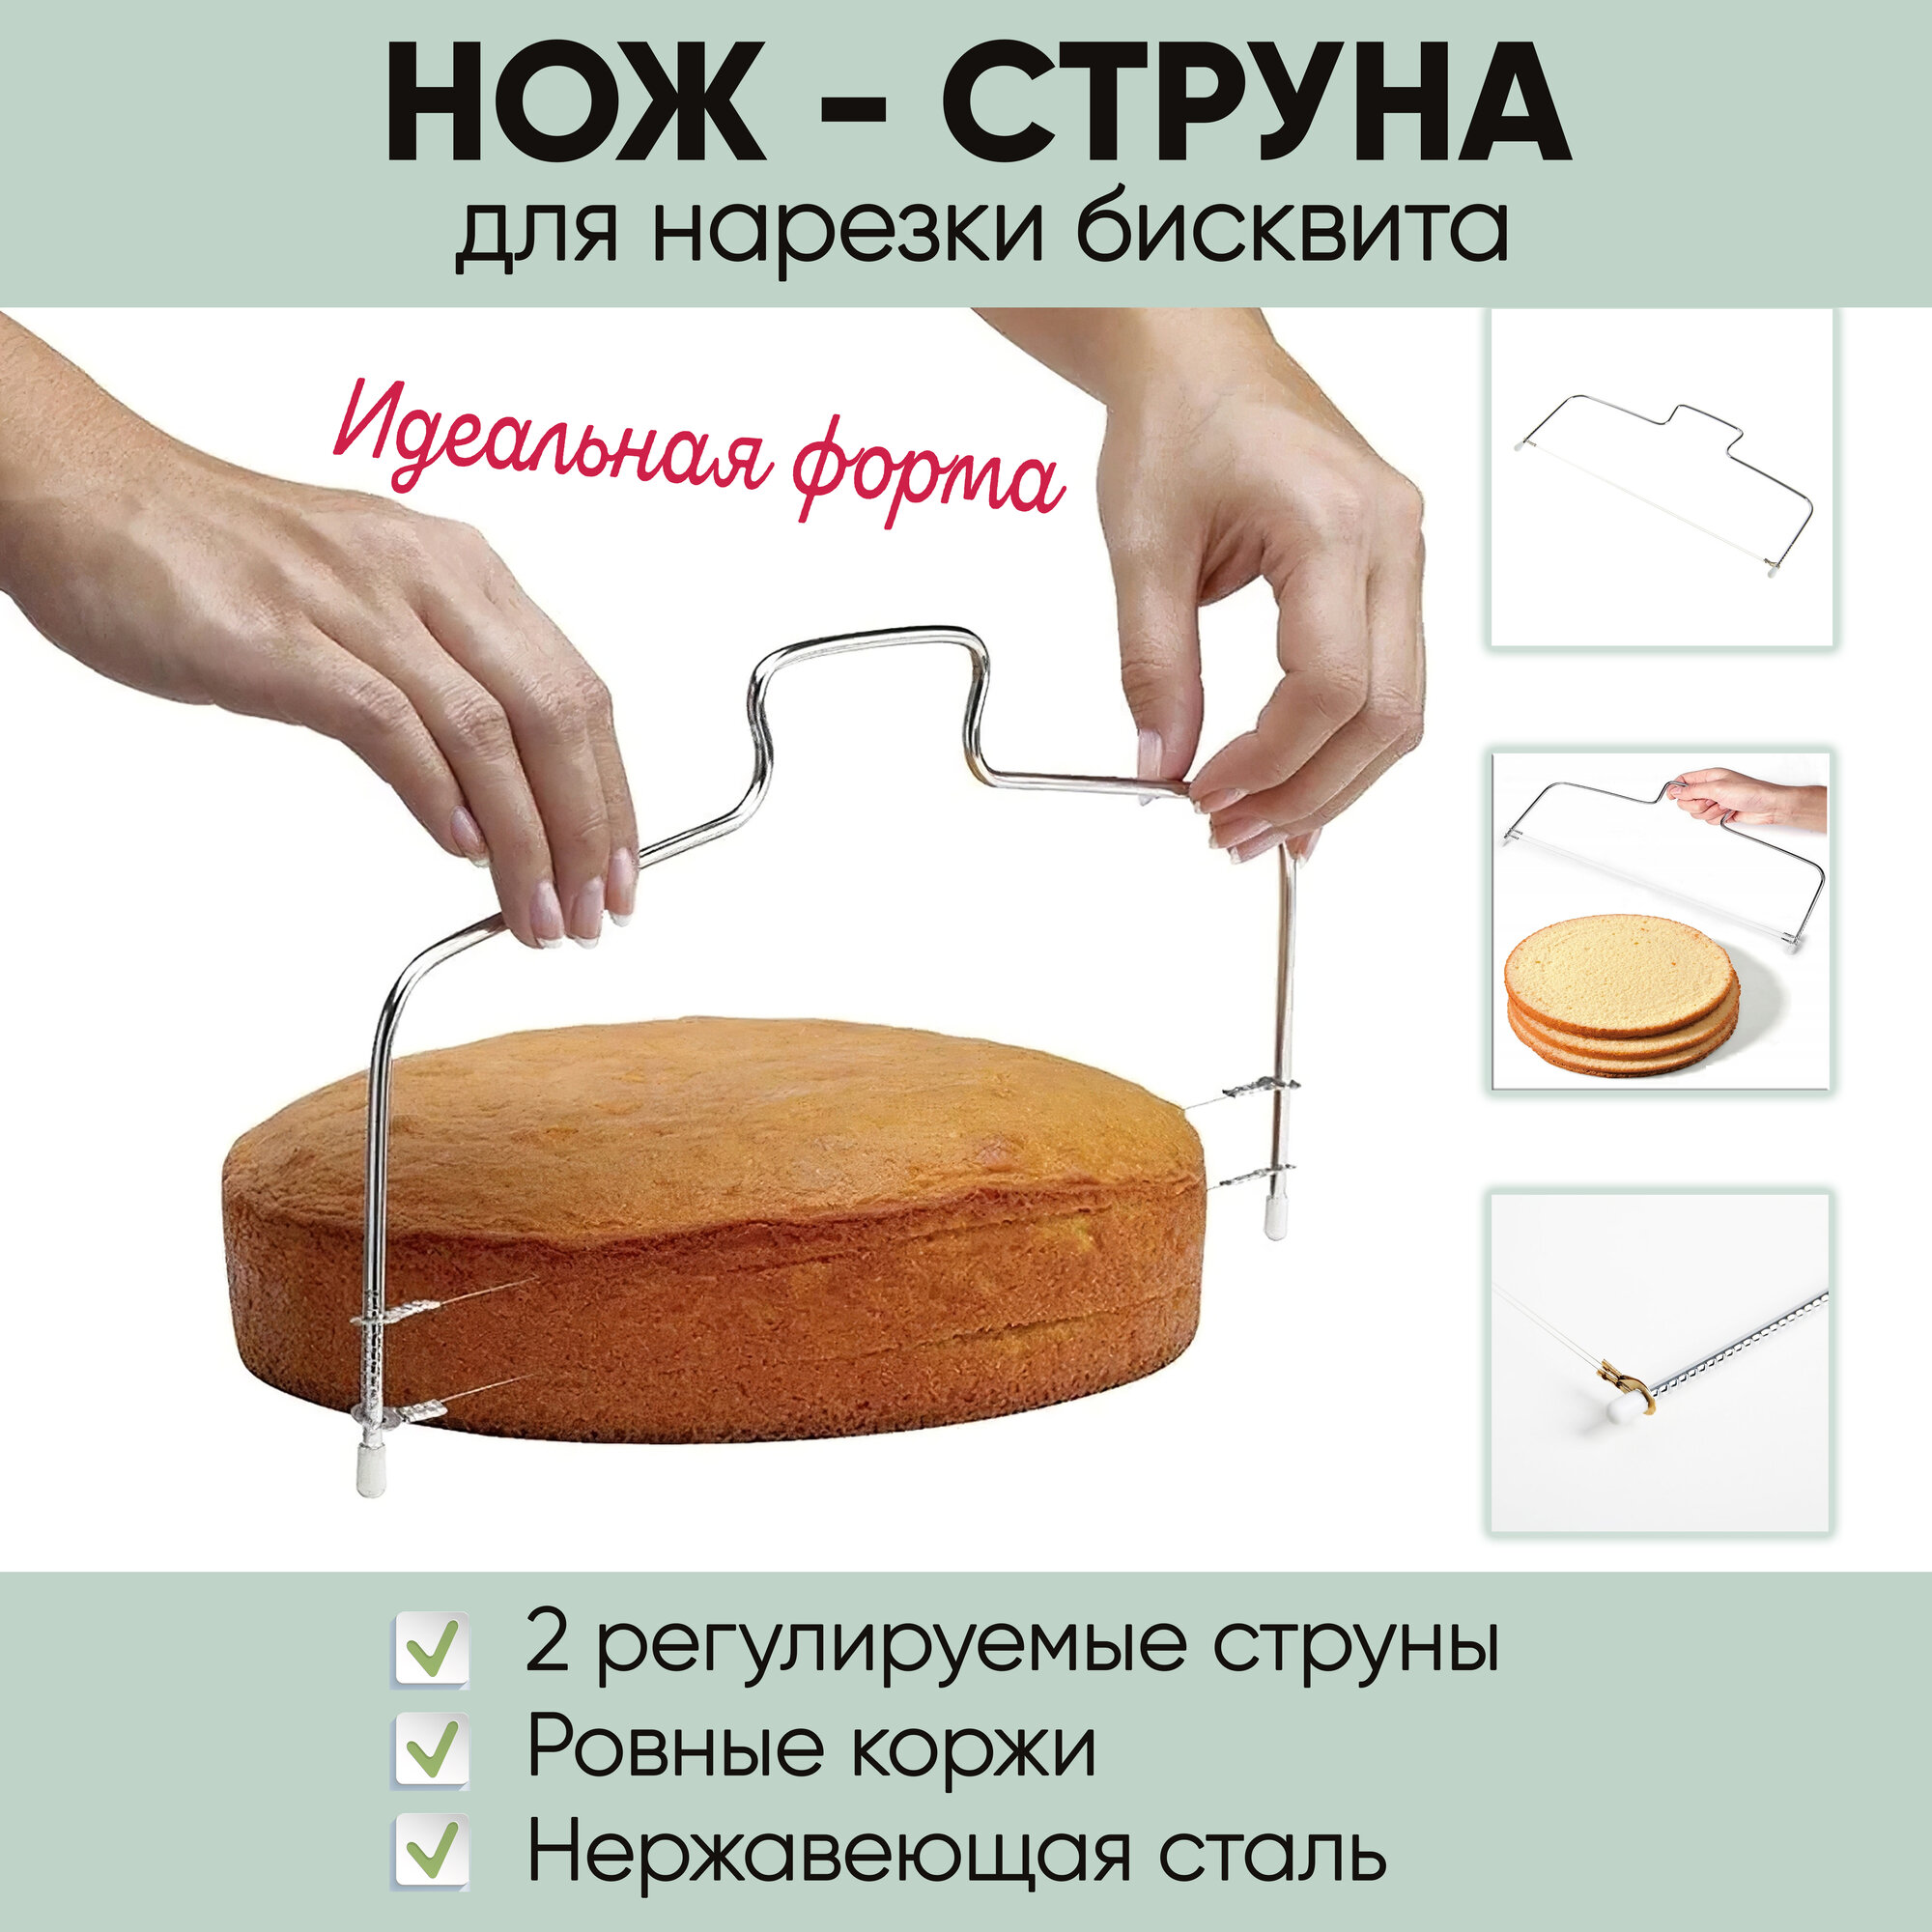 Нож струна для бисквита торта нарезки коржей кондитерский Gestia Home 29*9 см